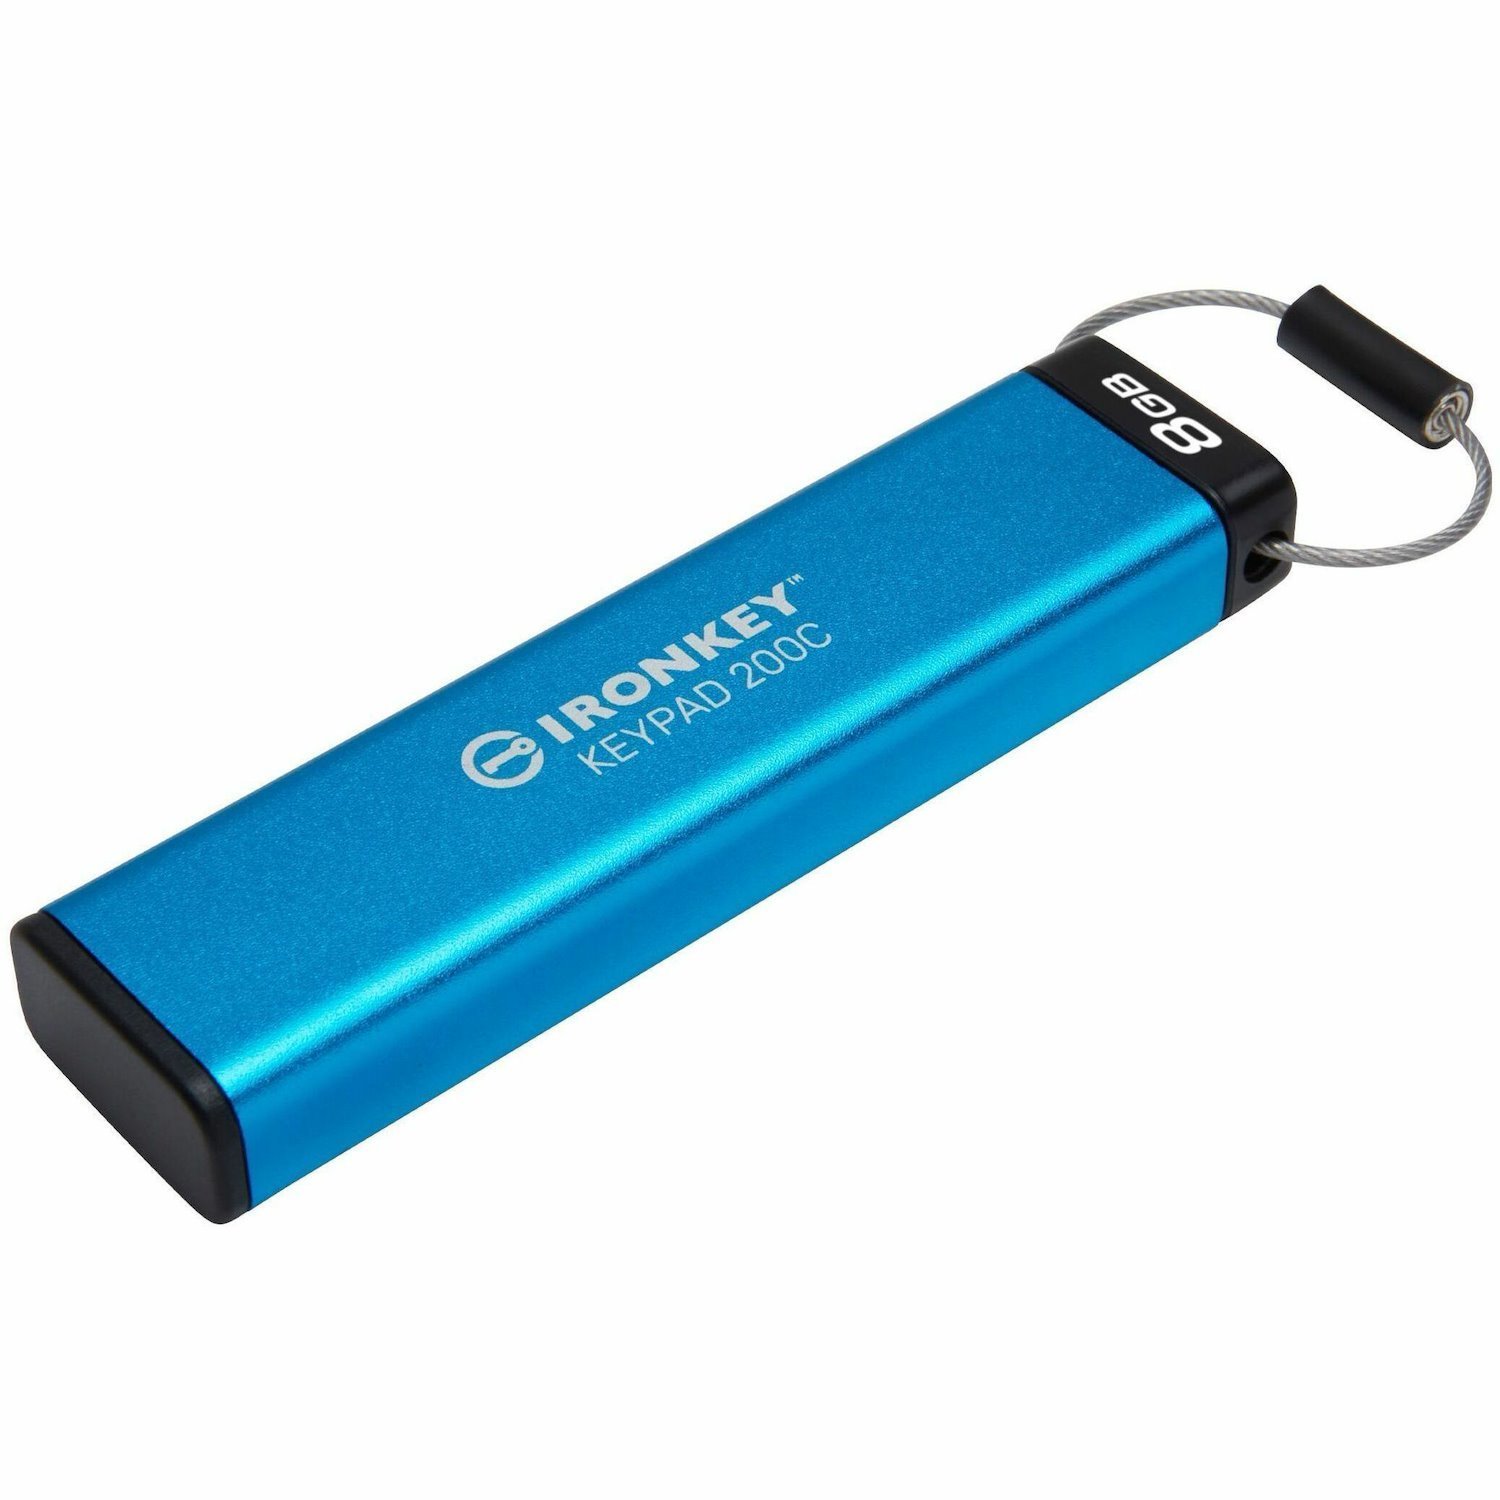 IronKey Keypad 200 8 GB USB 3.2 (Gen 1) Type C Flash Drive - Blue - XTS-AES